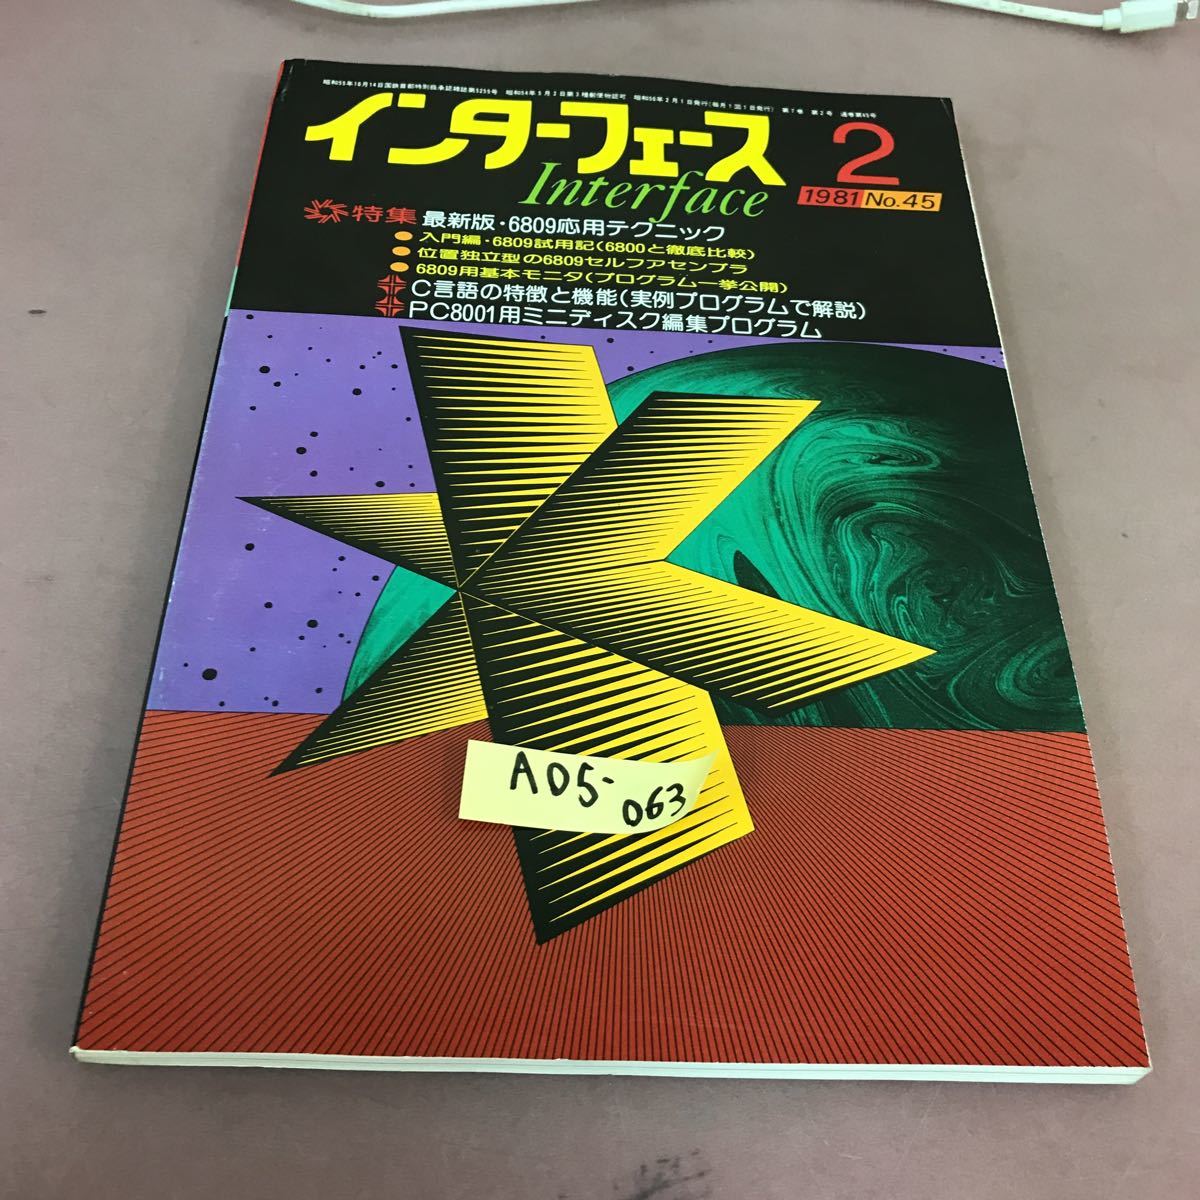 A05-063 インターフェース 81-2 No.45 最新版・6809.応用テクニックC言語CQ出版社